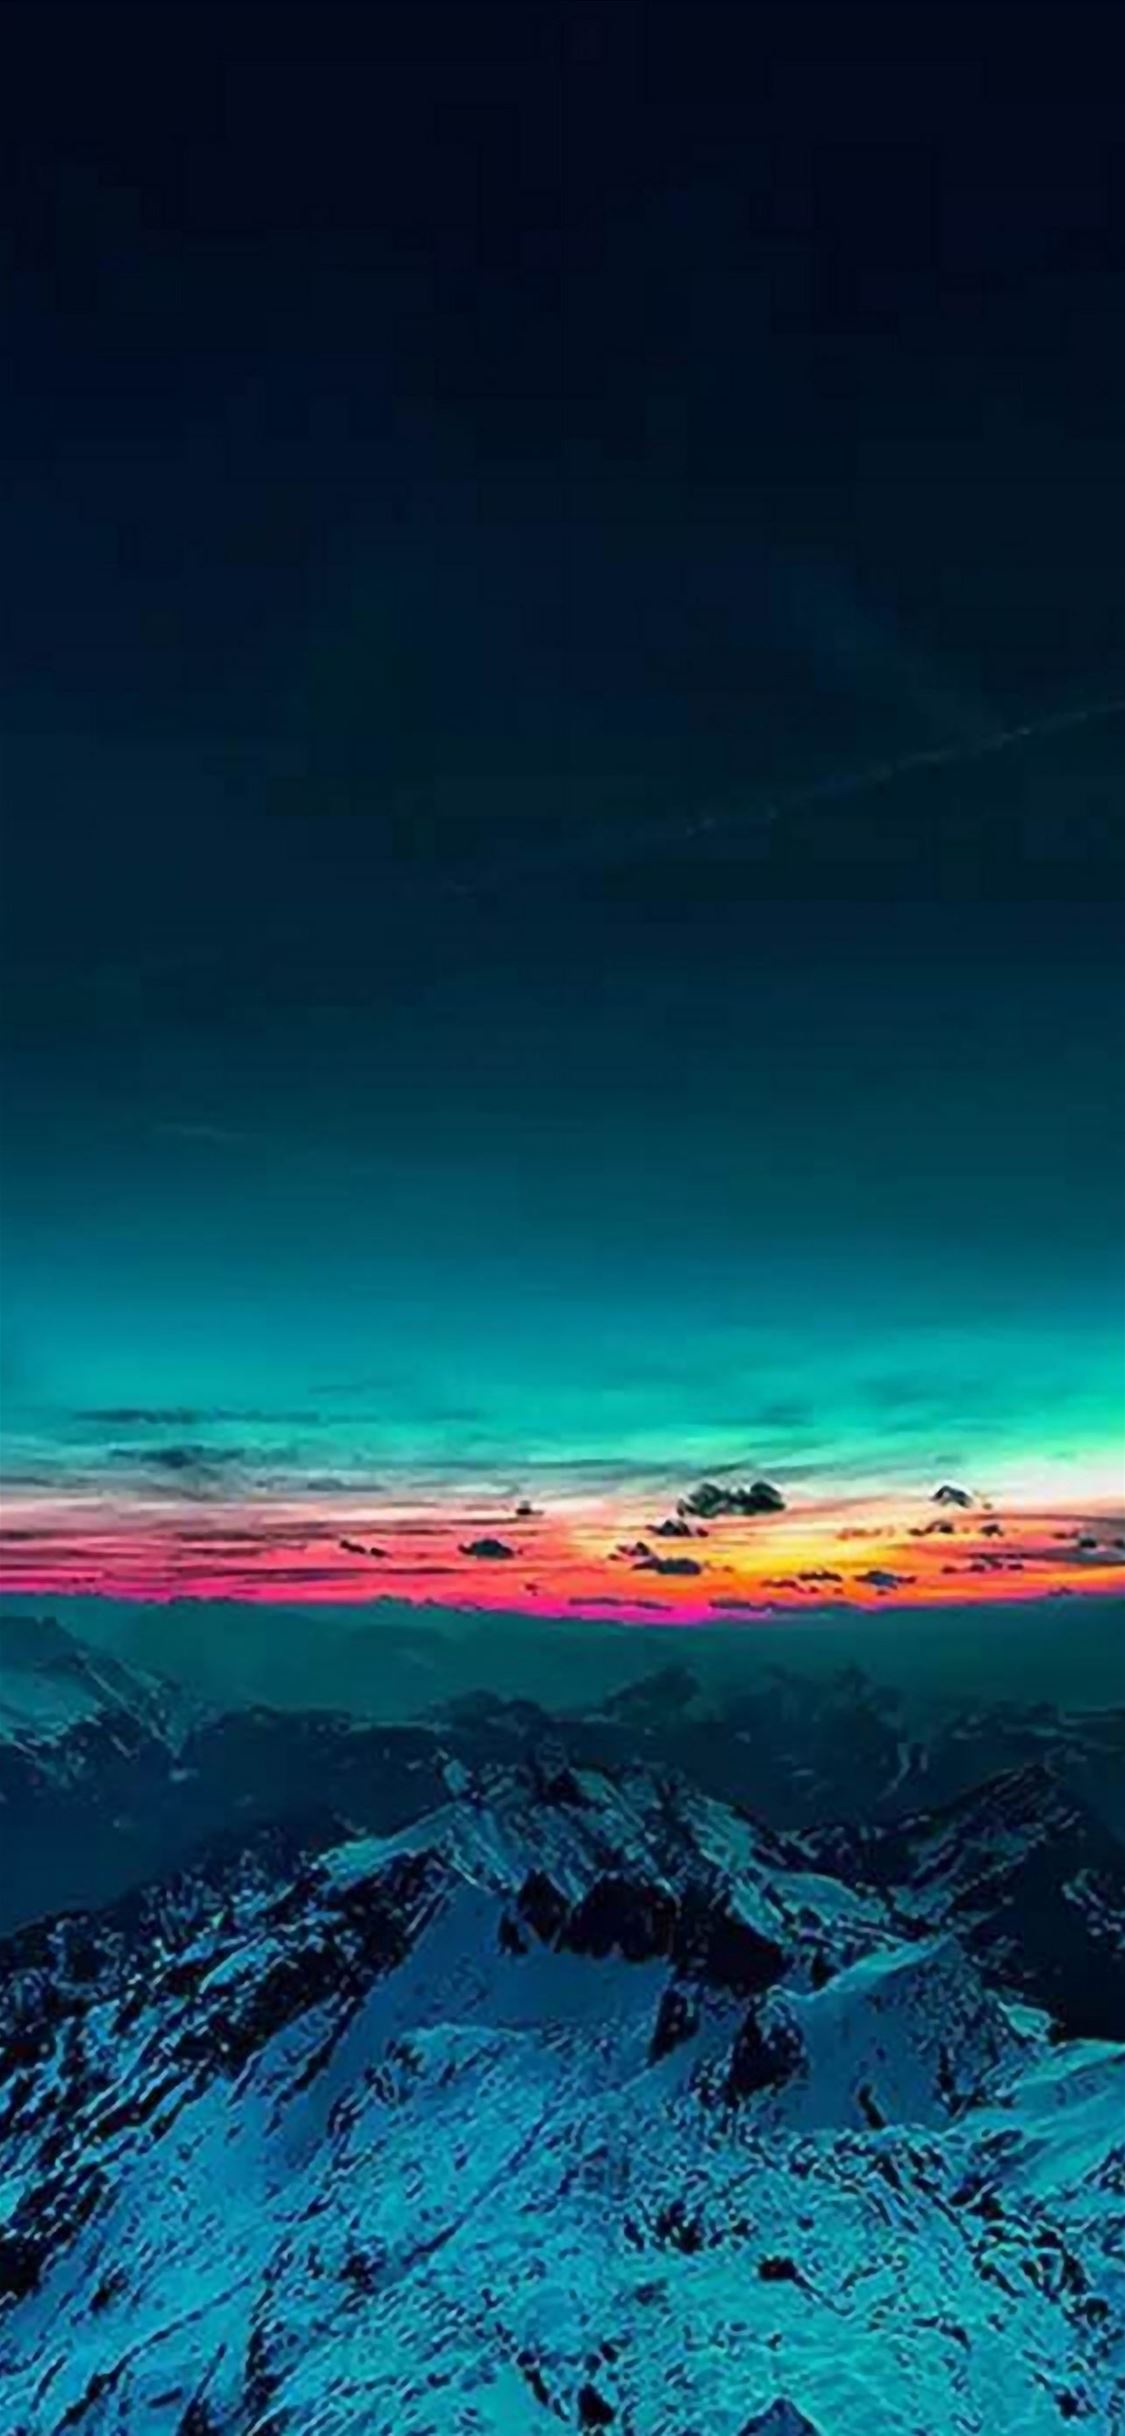 Sky On Fire Mountain Range Sunset iPhone wallpaper 